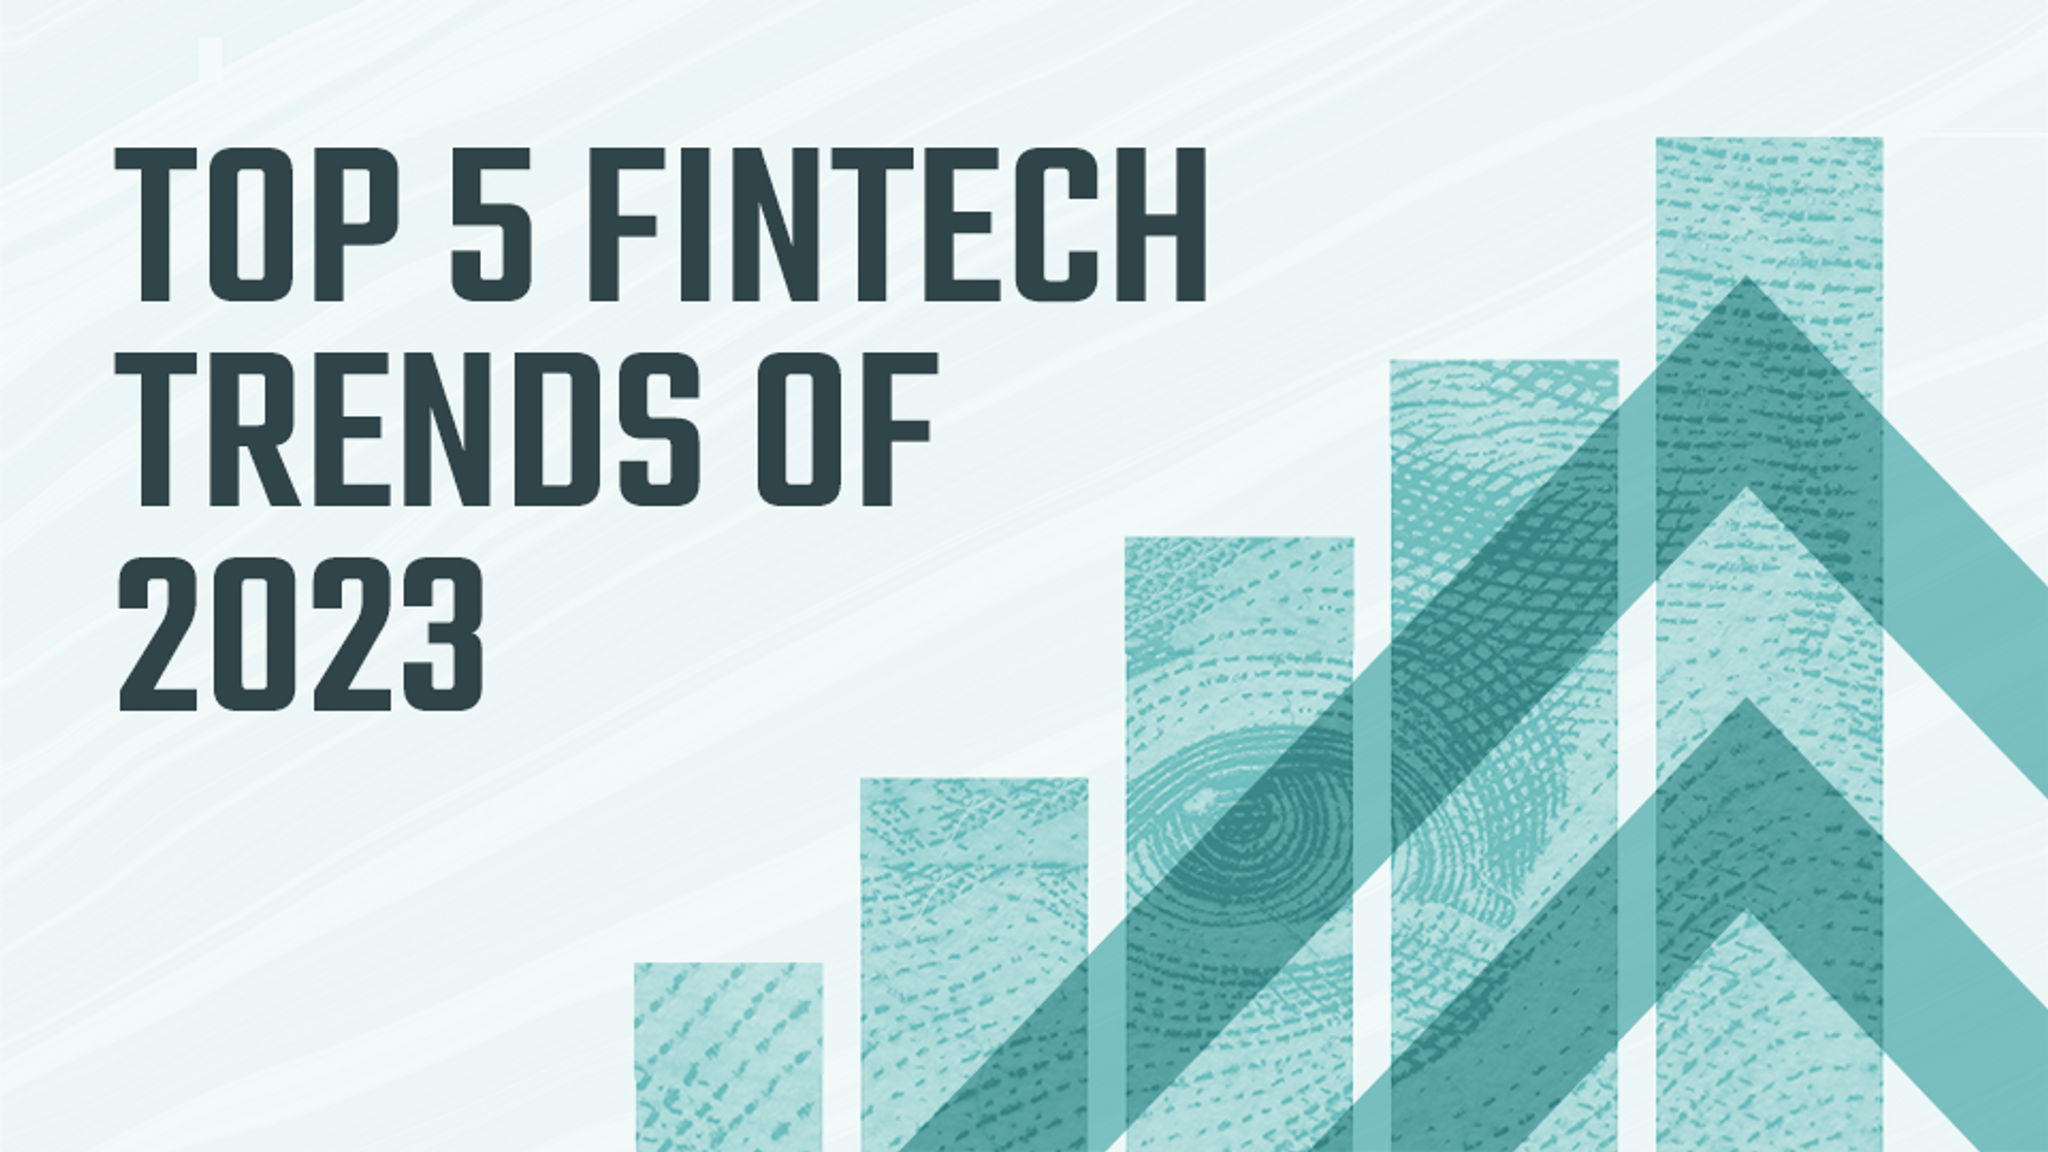 Top 5 Fintech Trends of 2023